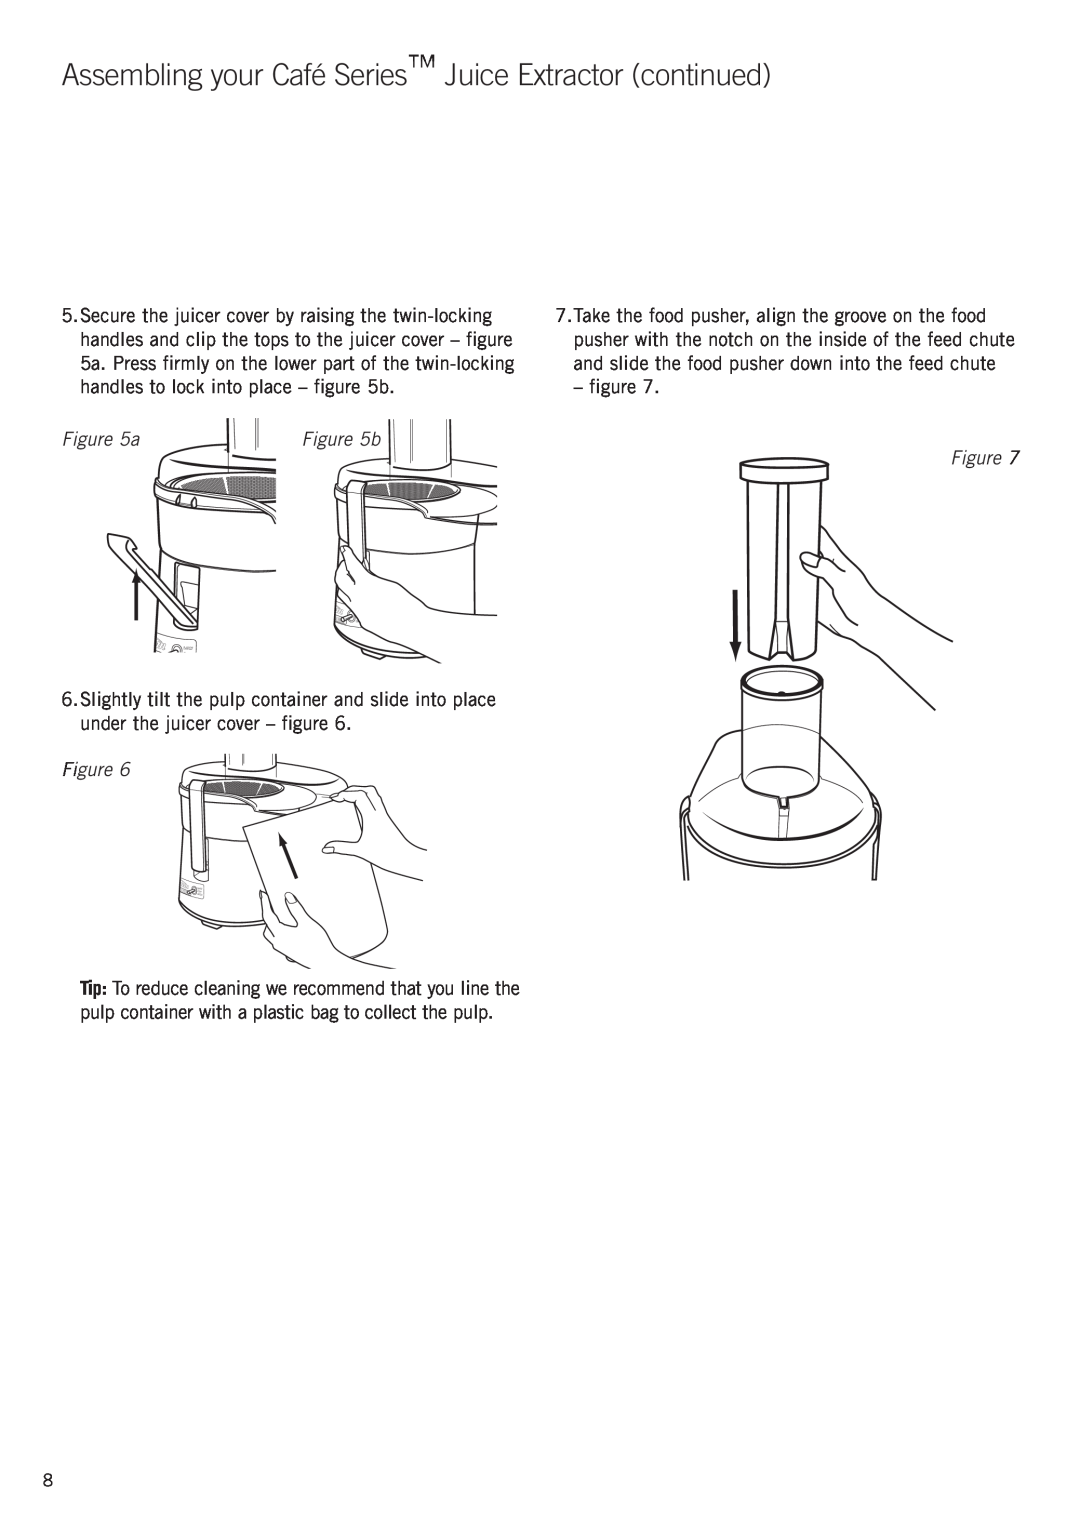 Sunbeam JE8500 manual Assembling your Café Series Juice Extractor continued 